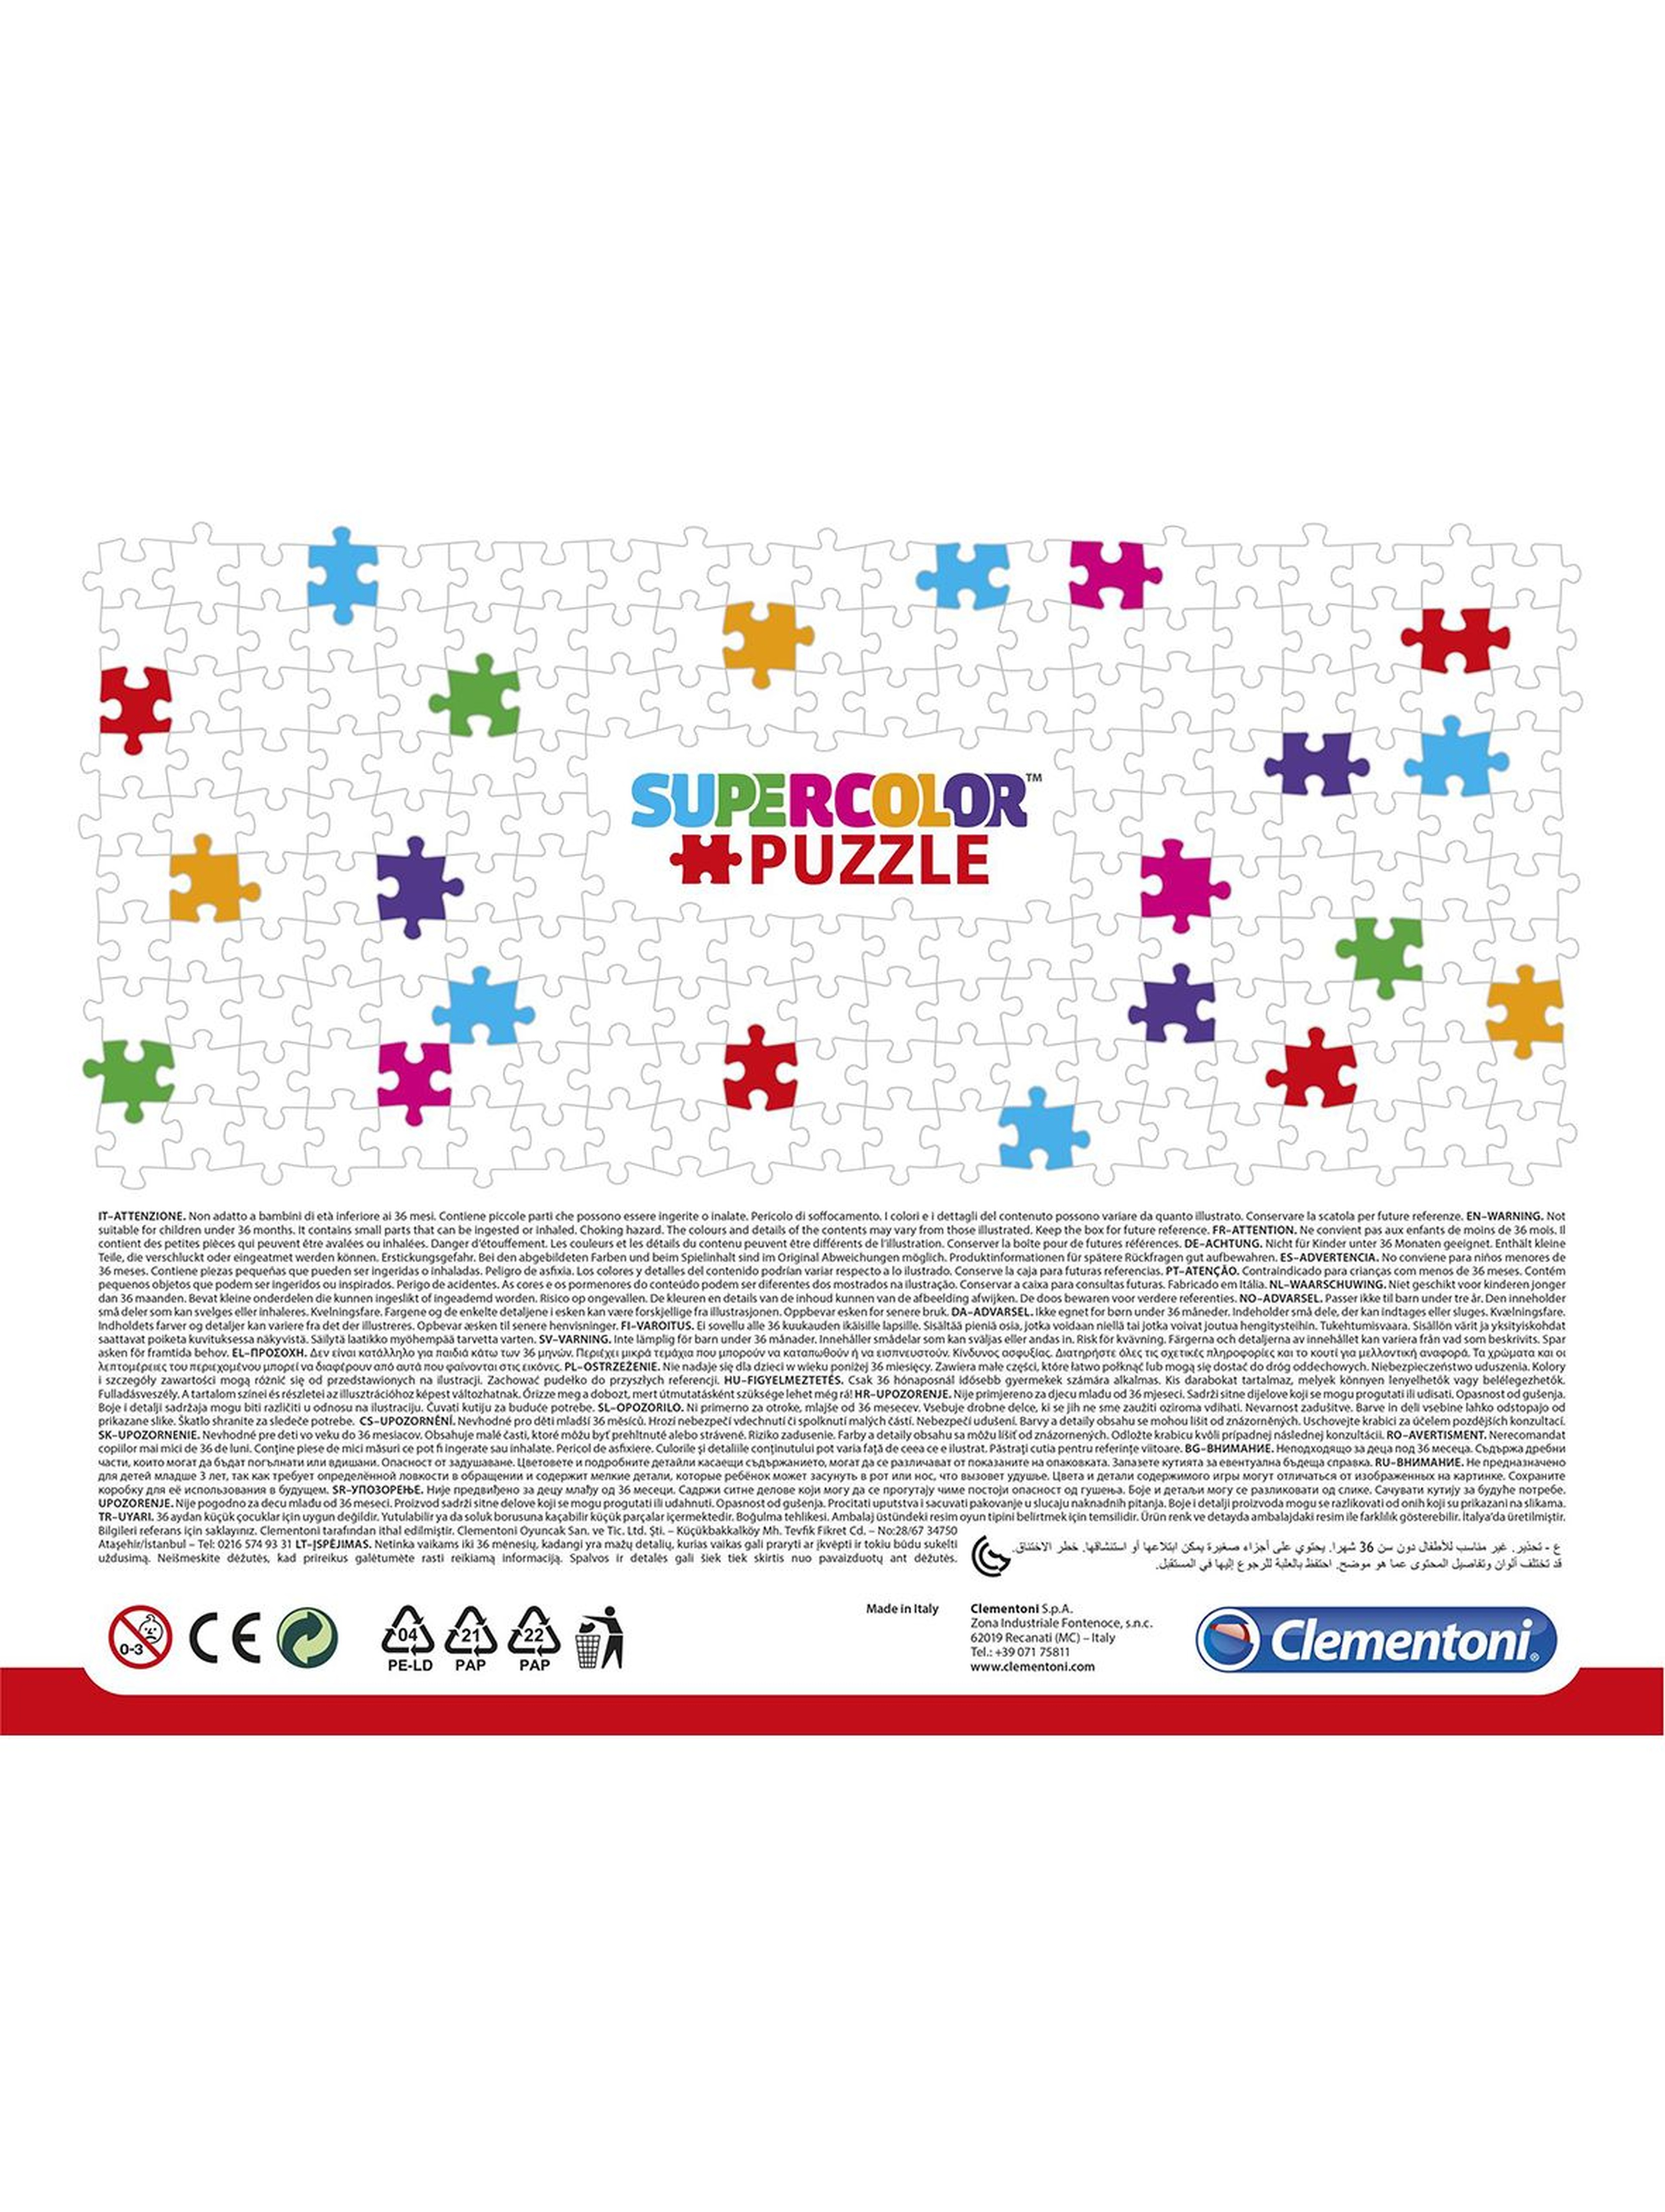 Puzzle Maxi Super Color Toy Story 4  - 104 elementy wiek 4+